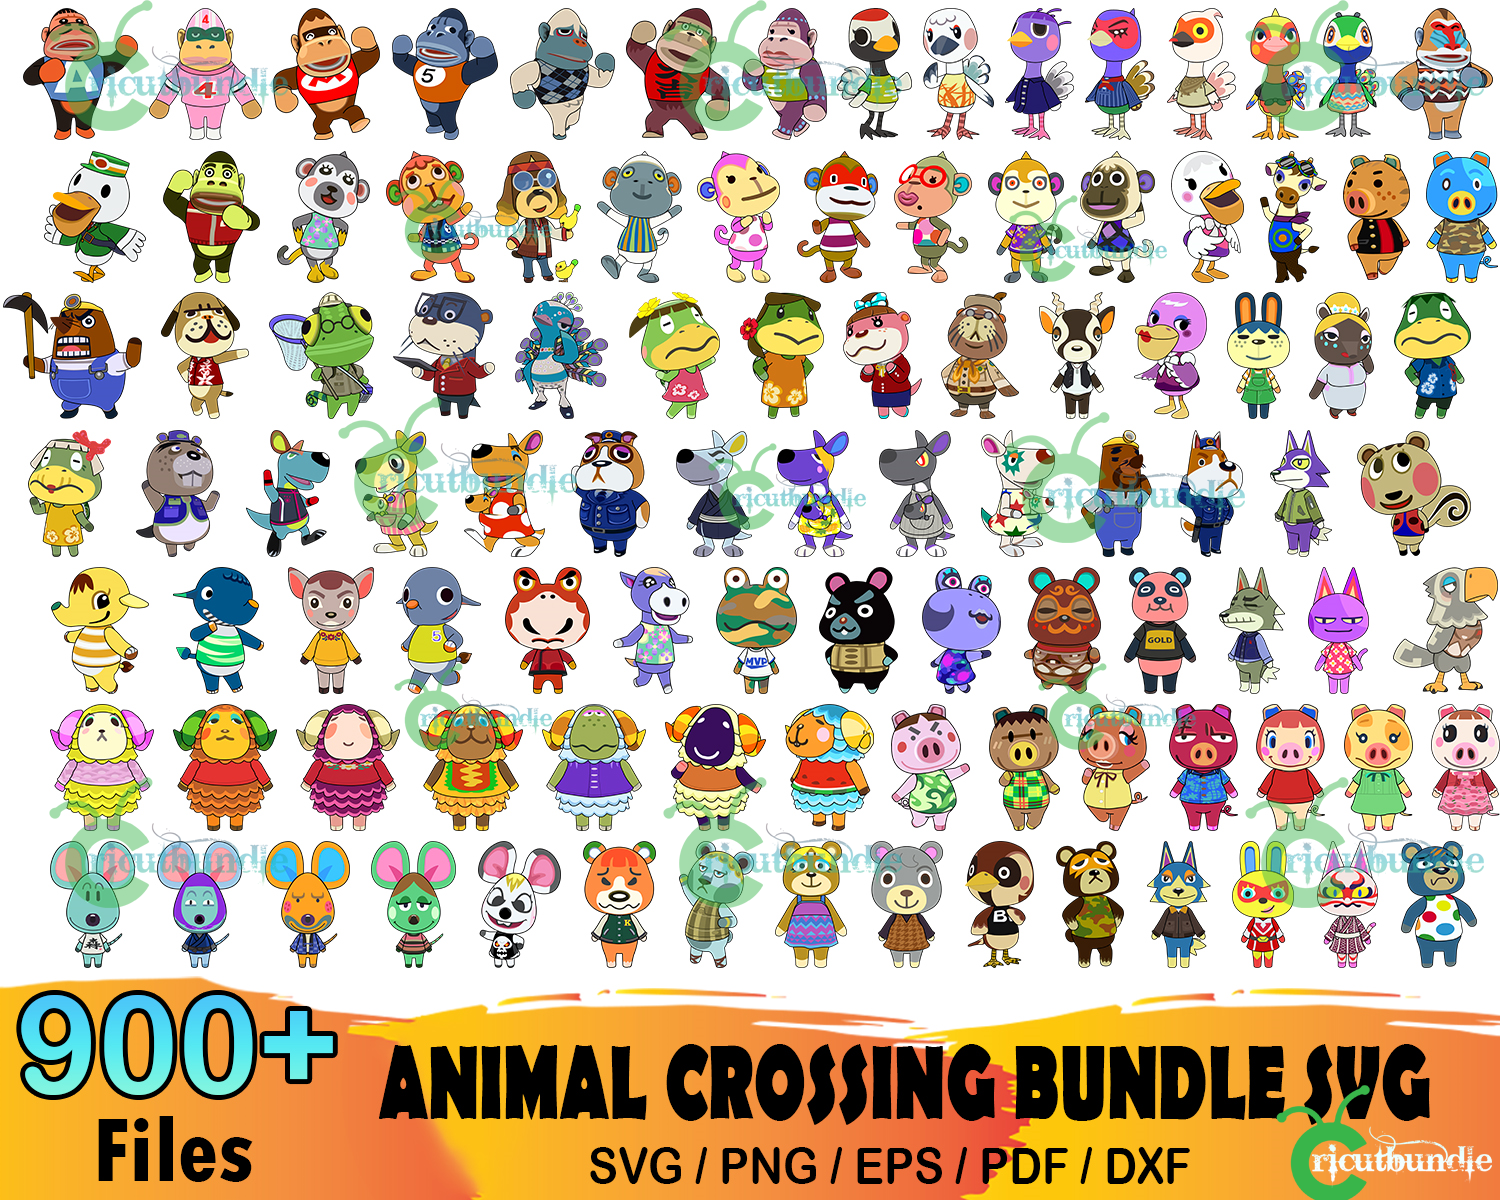 3500 files Animal Crossing Bundle Svg